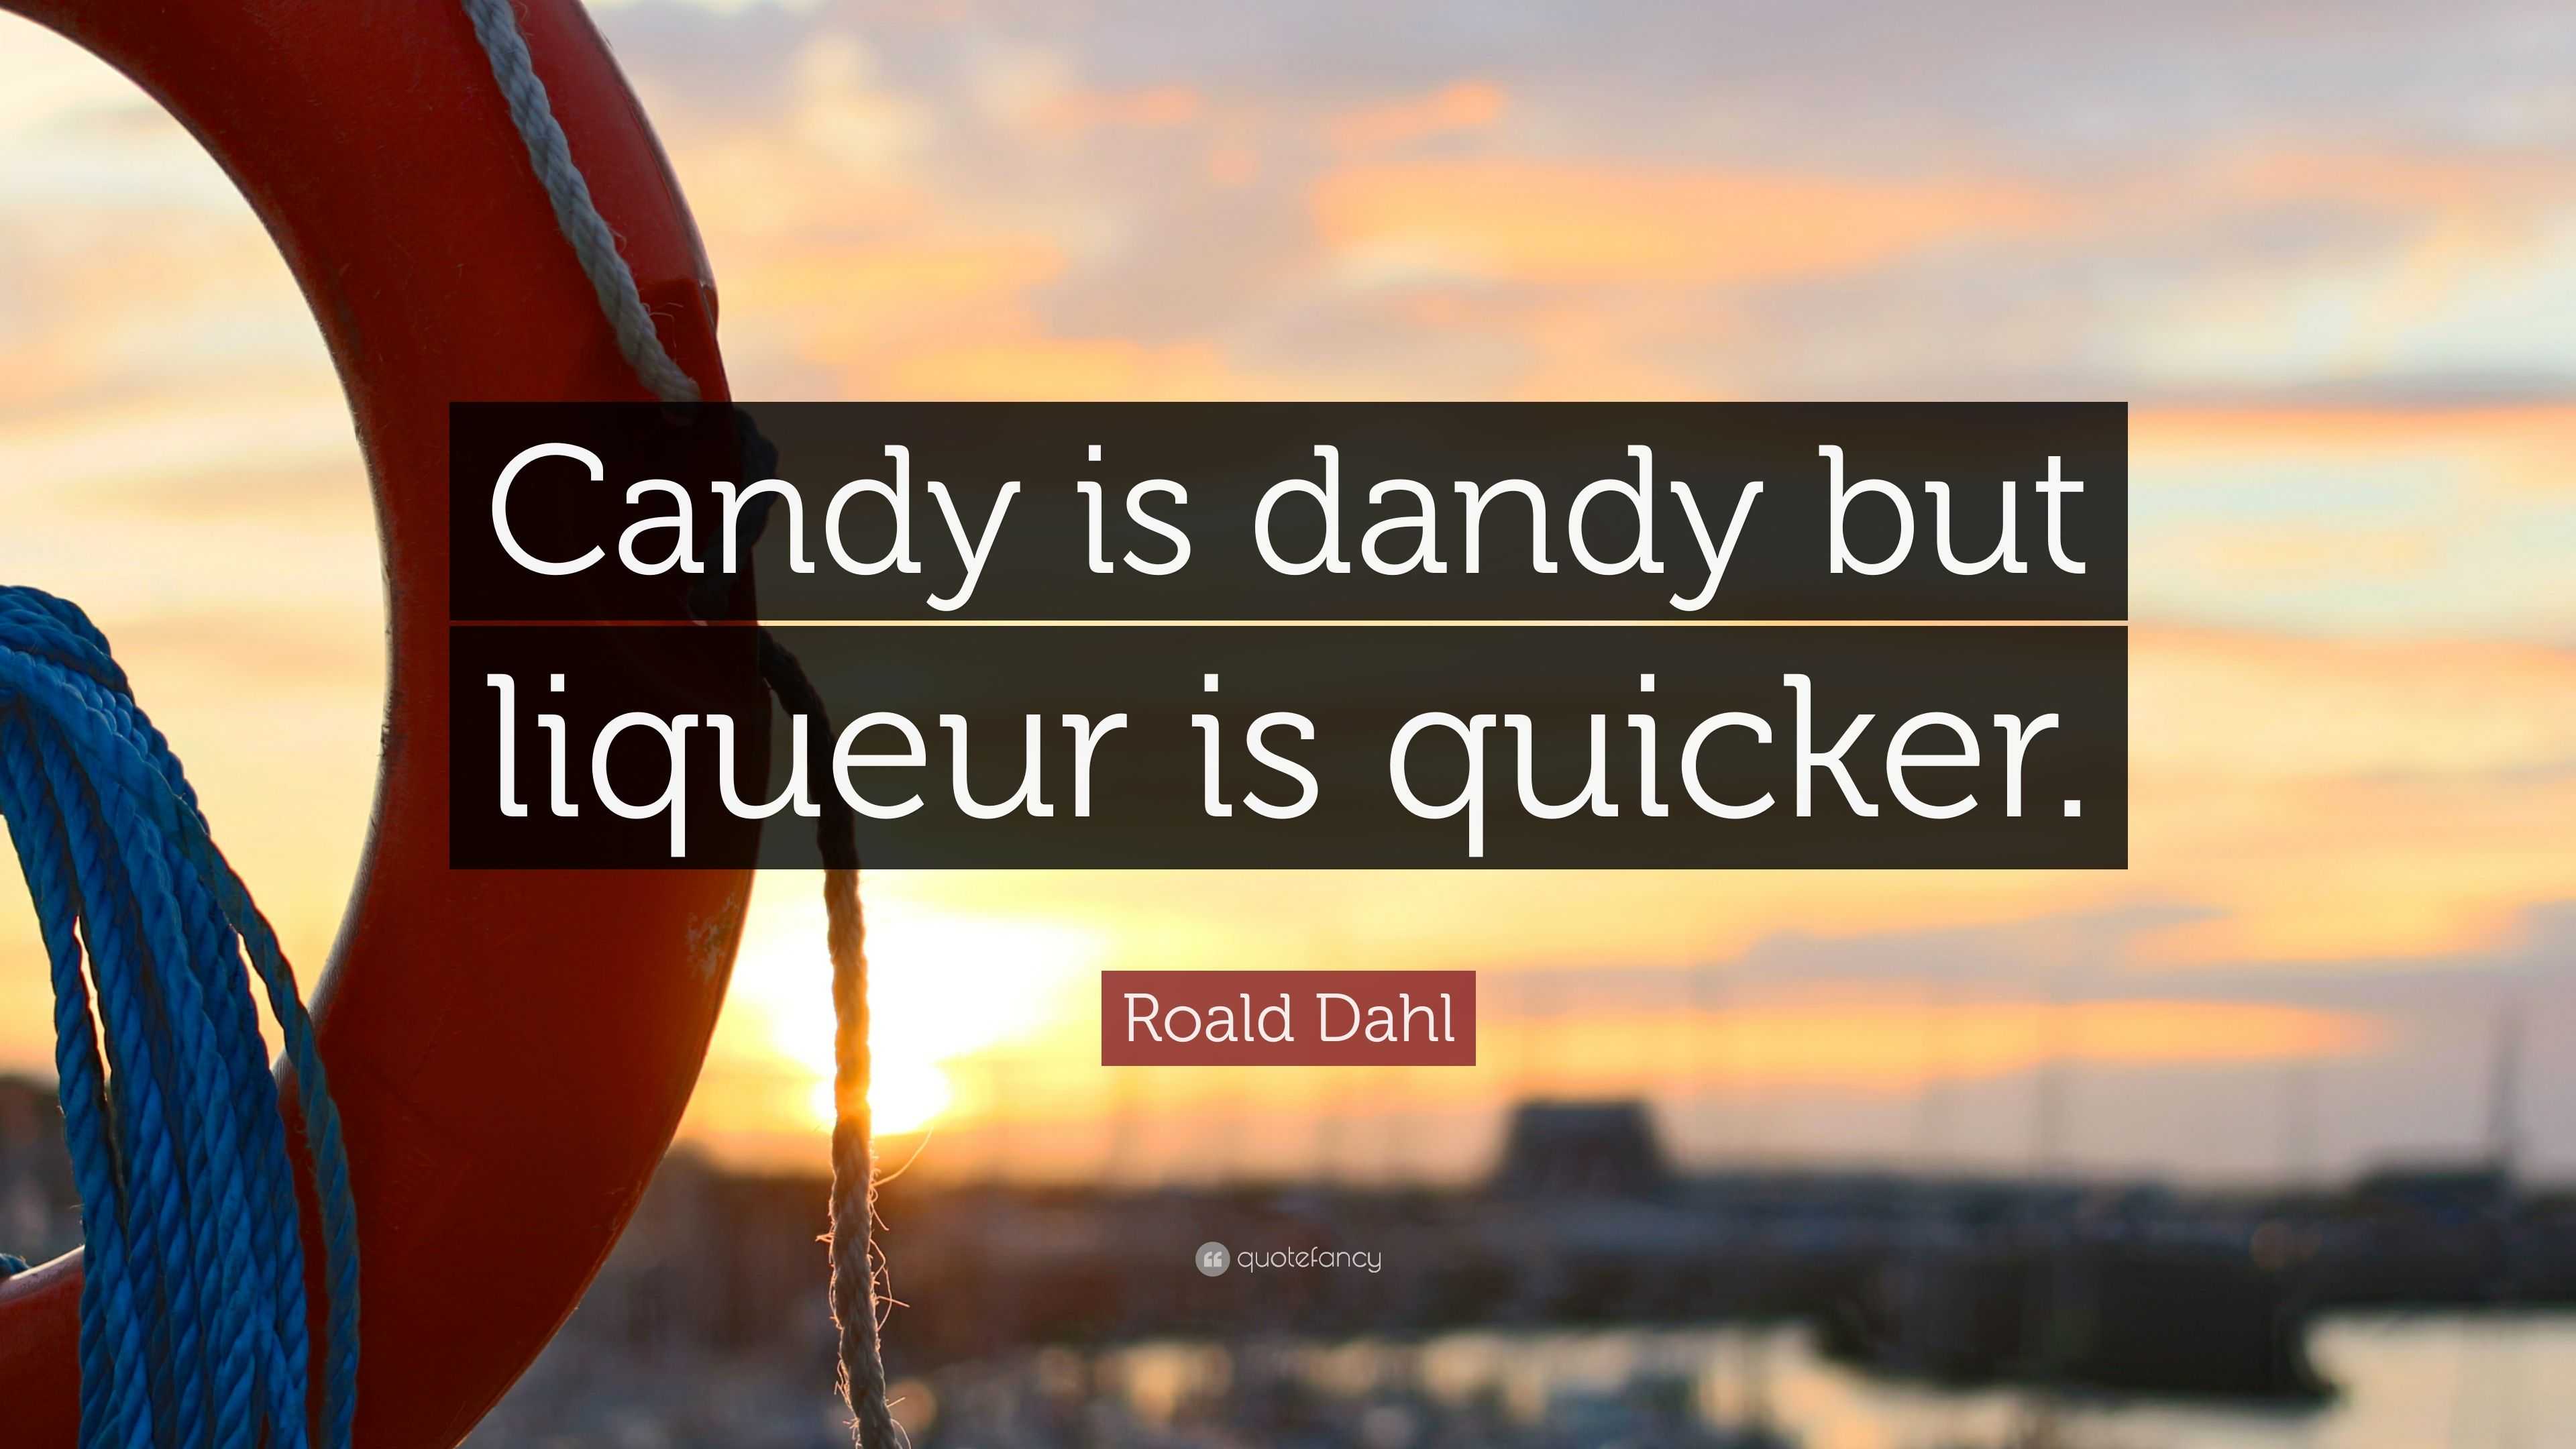 Roald Dahl Quote: “Candy is dandy but liqueur is quicker.”